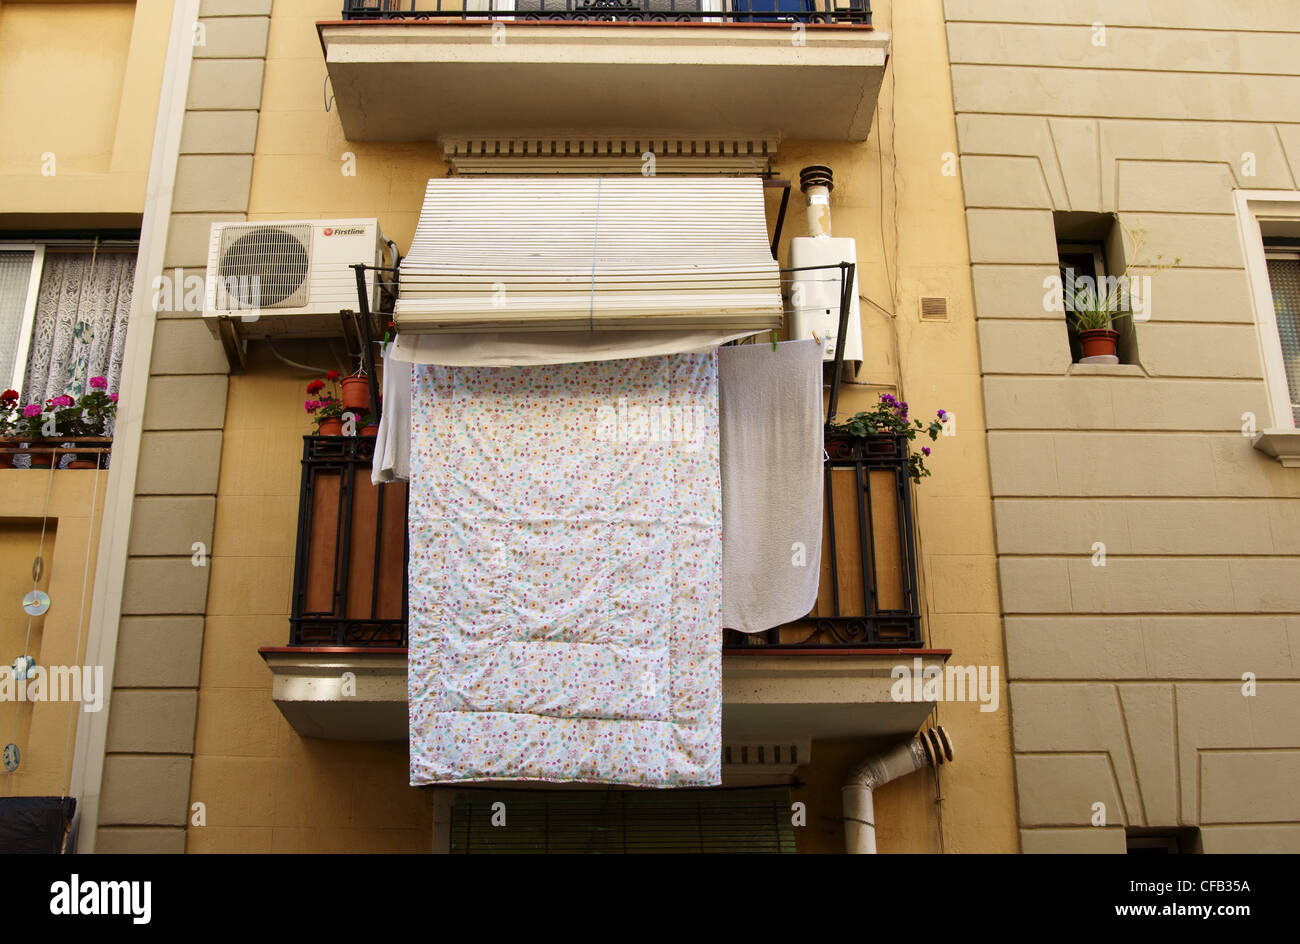 Balcony with washing, in Barceloneta, the fisherman's quarter of Barcelona, Spain Stock Photo